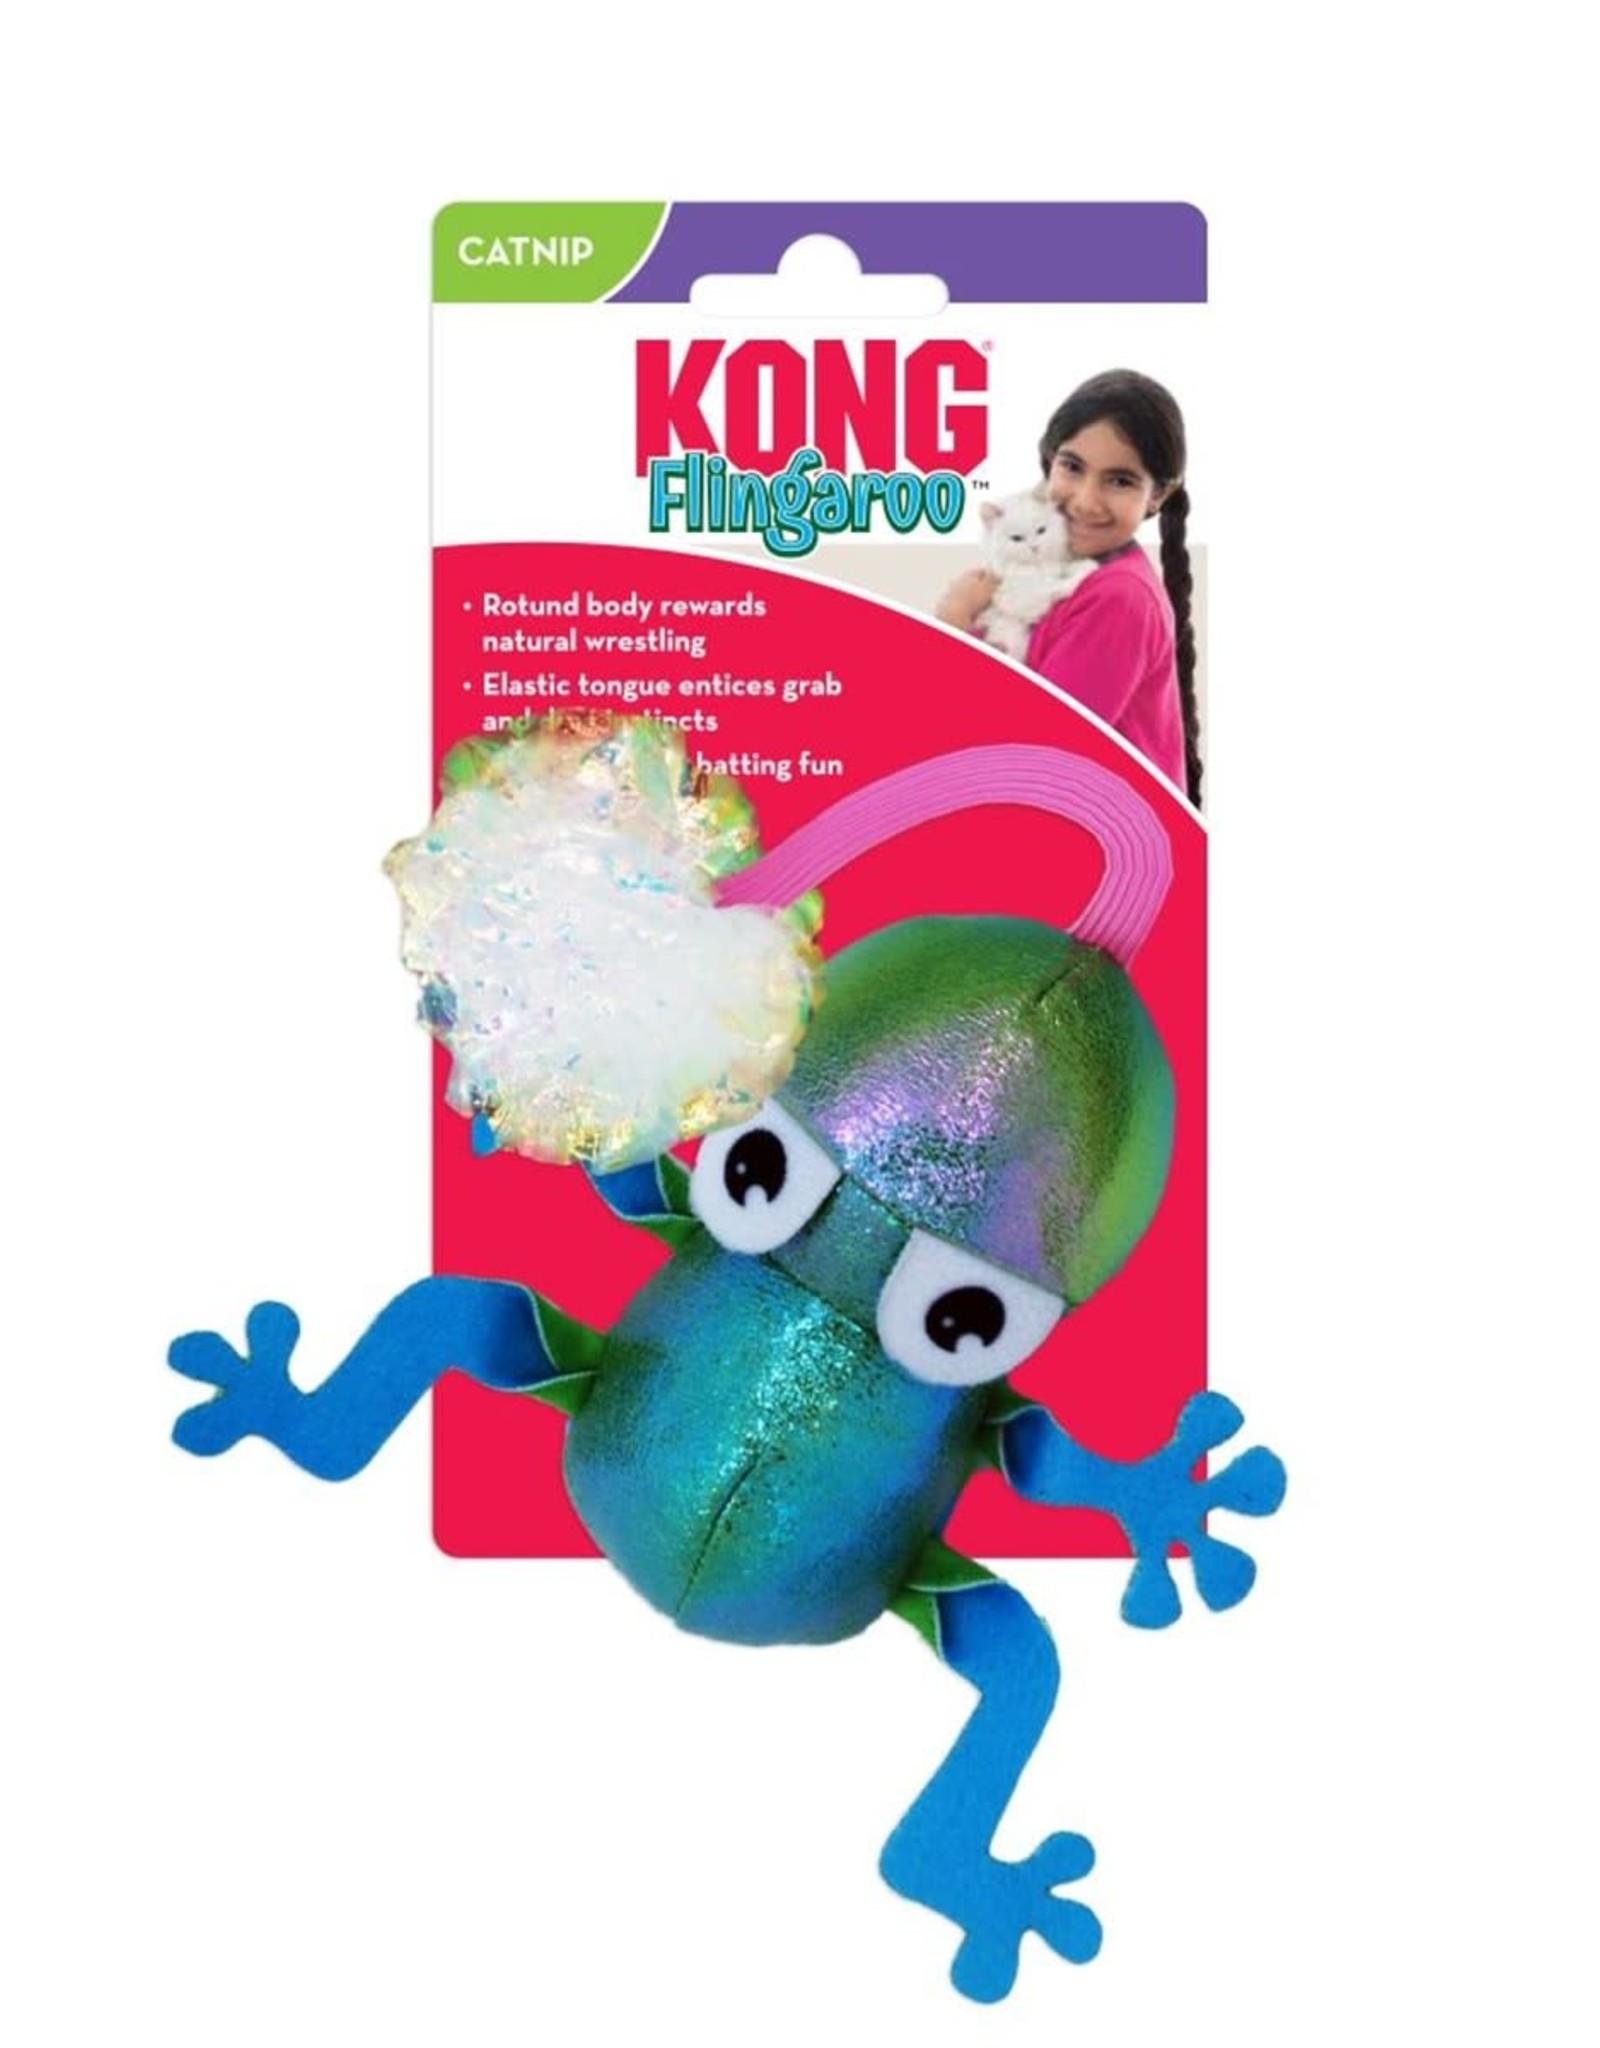 KONG COMPANY FLINGAROO FROG KONG DISC